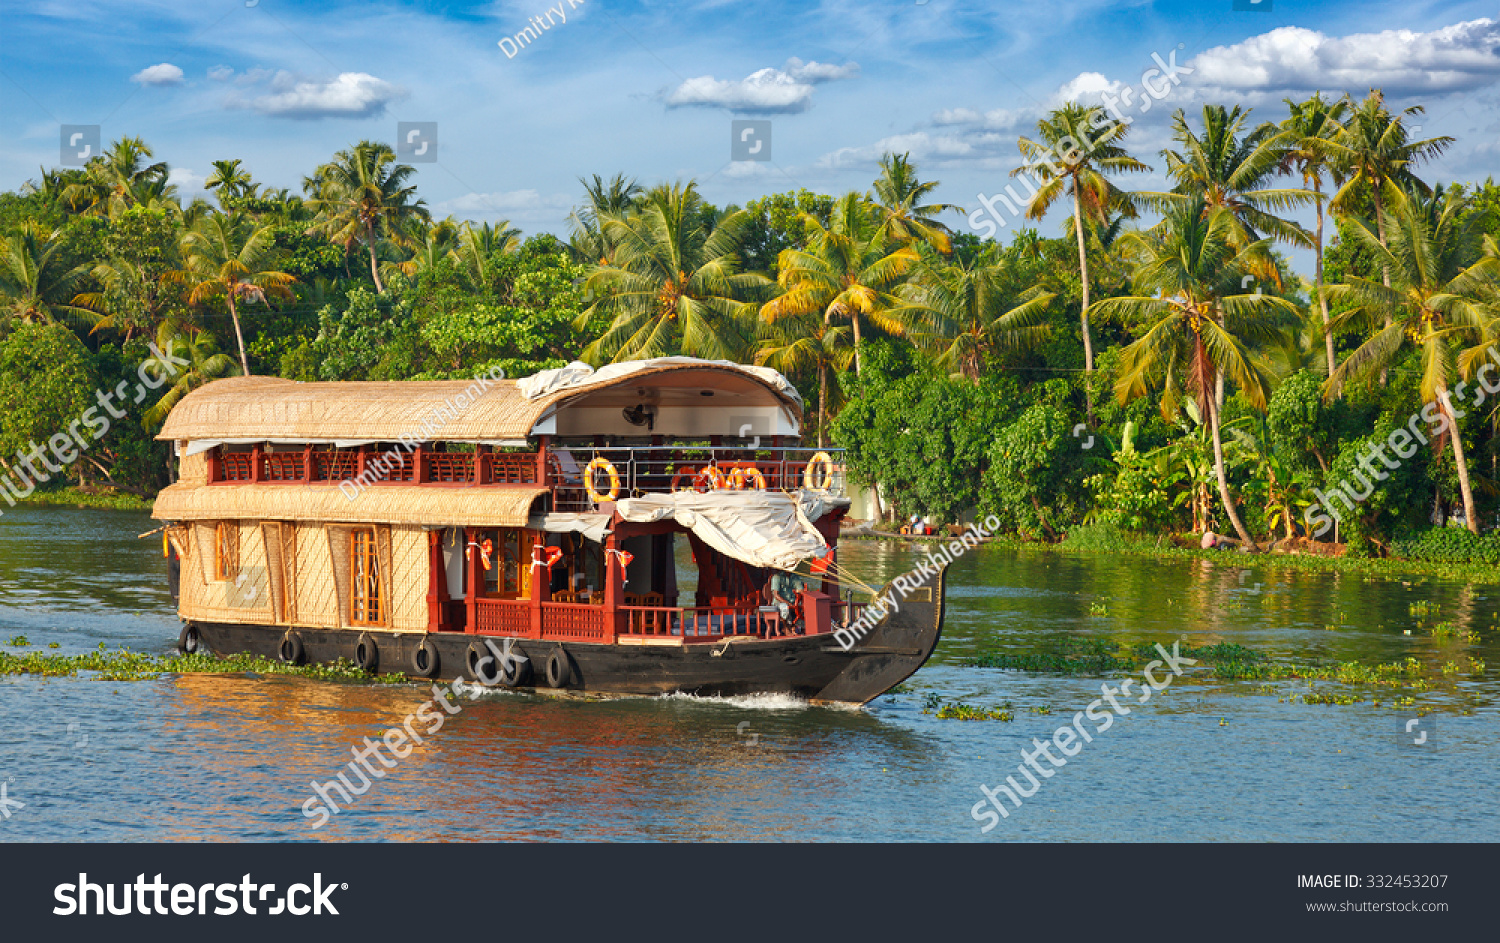 Panorama of tourist houseboat on Kerala backwaters. Kerala, India #332453207